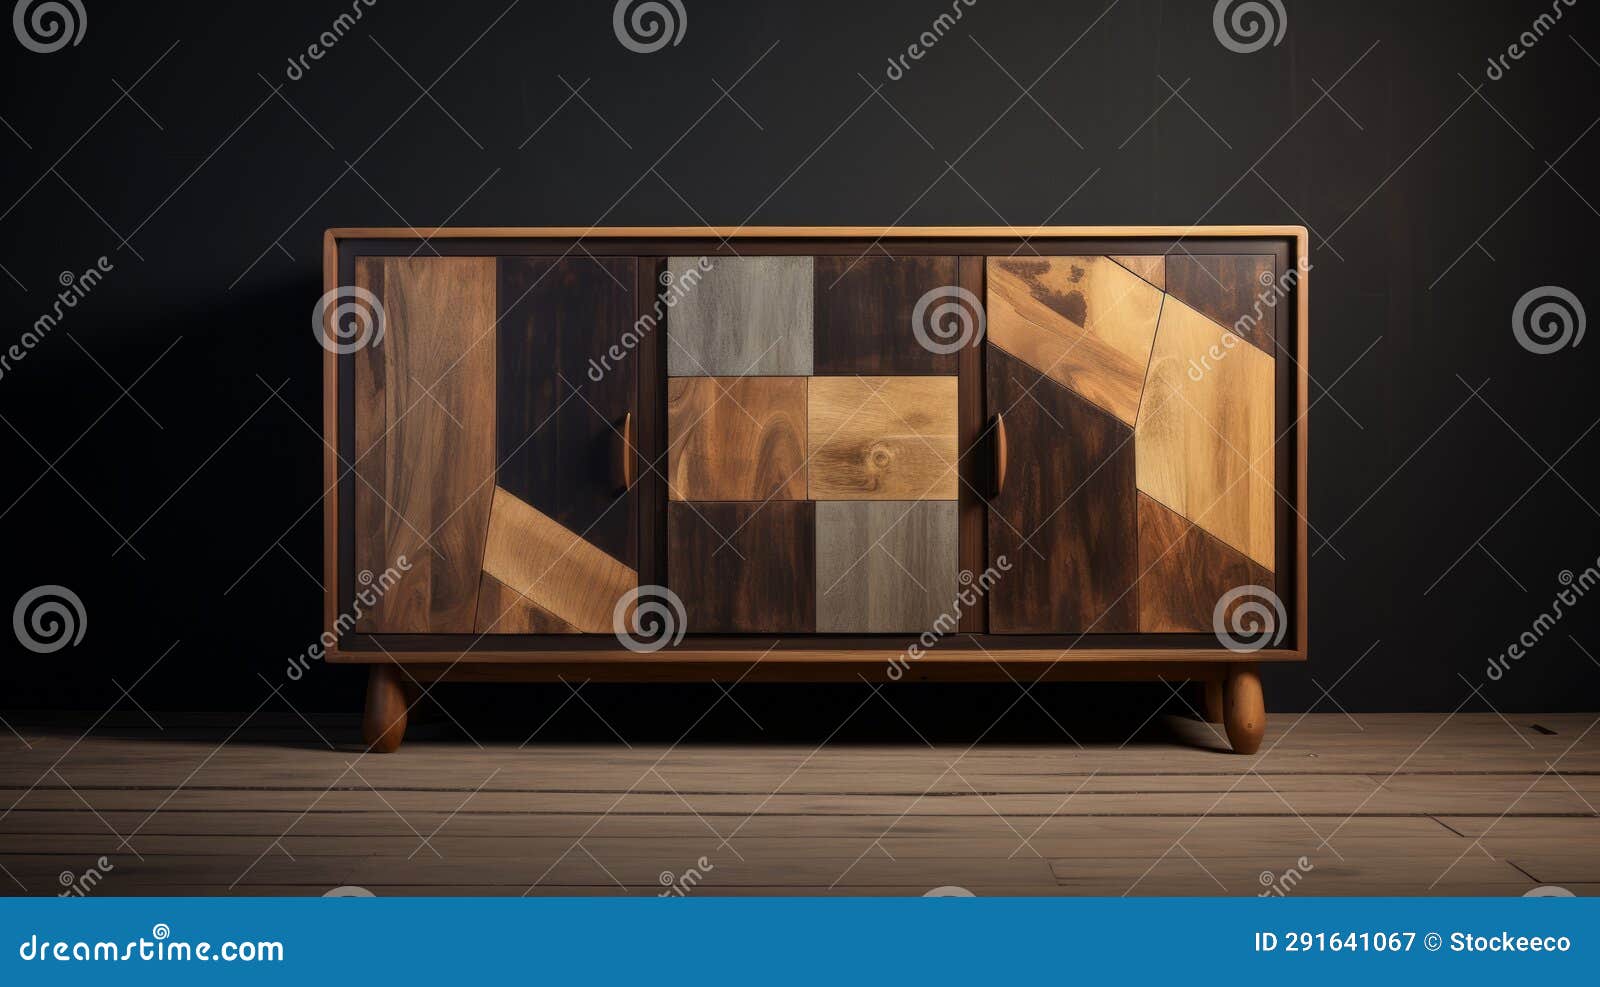 modern dark wood cabinet with geometric patterns